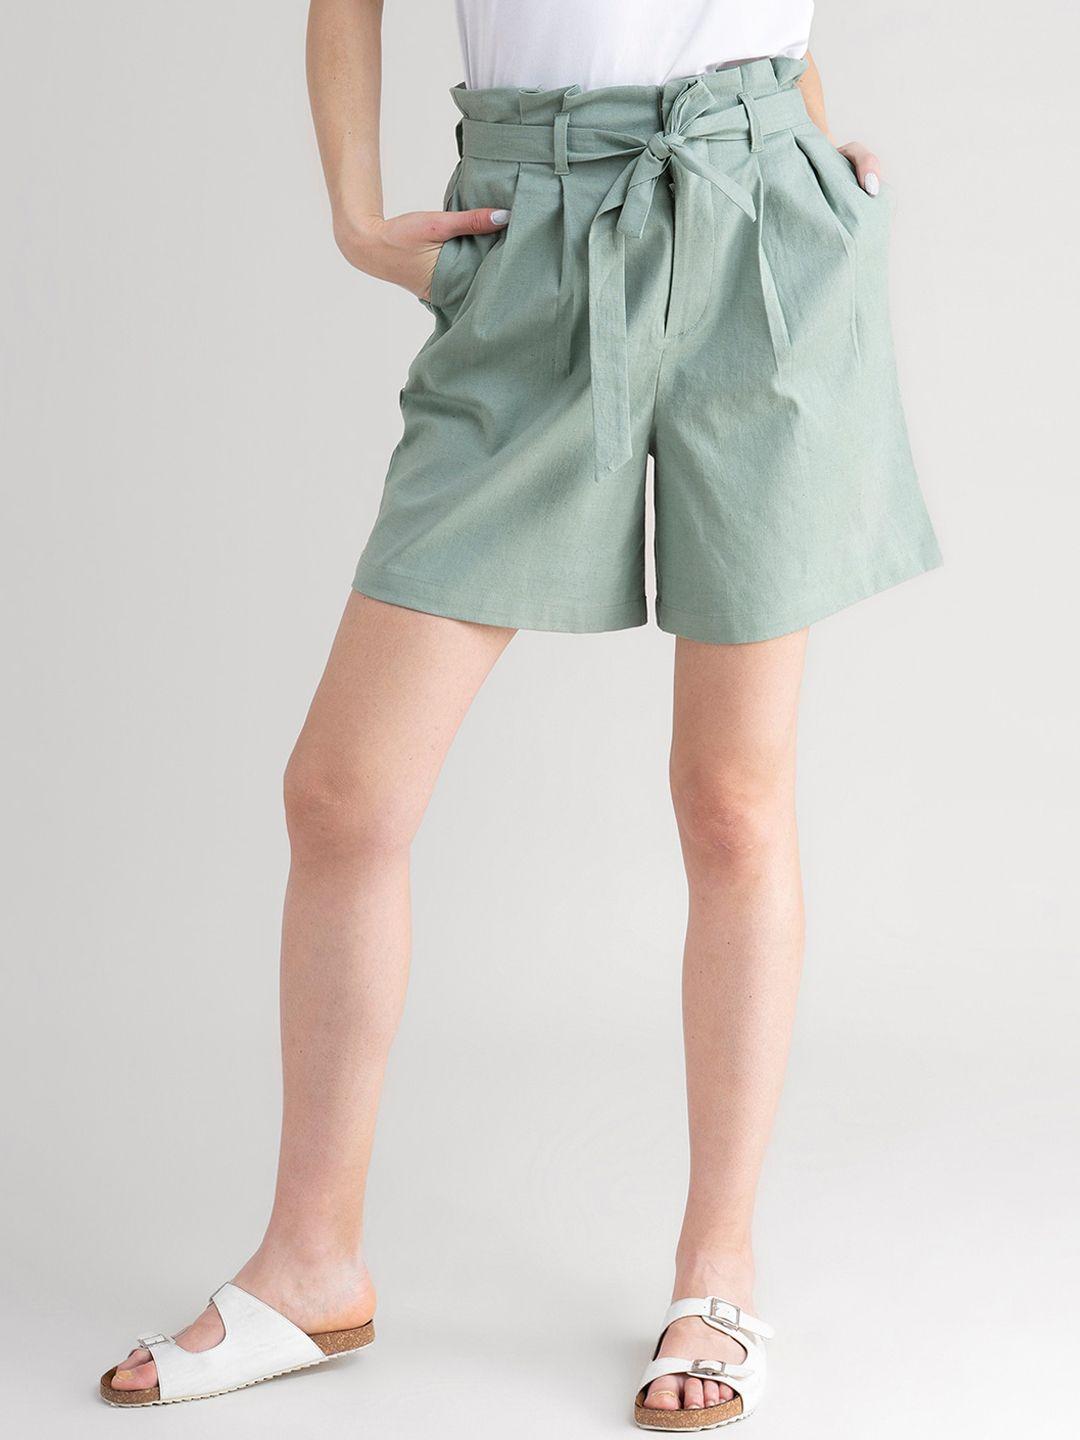 fablestreet women sage green paper bag shorts